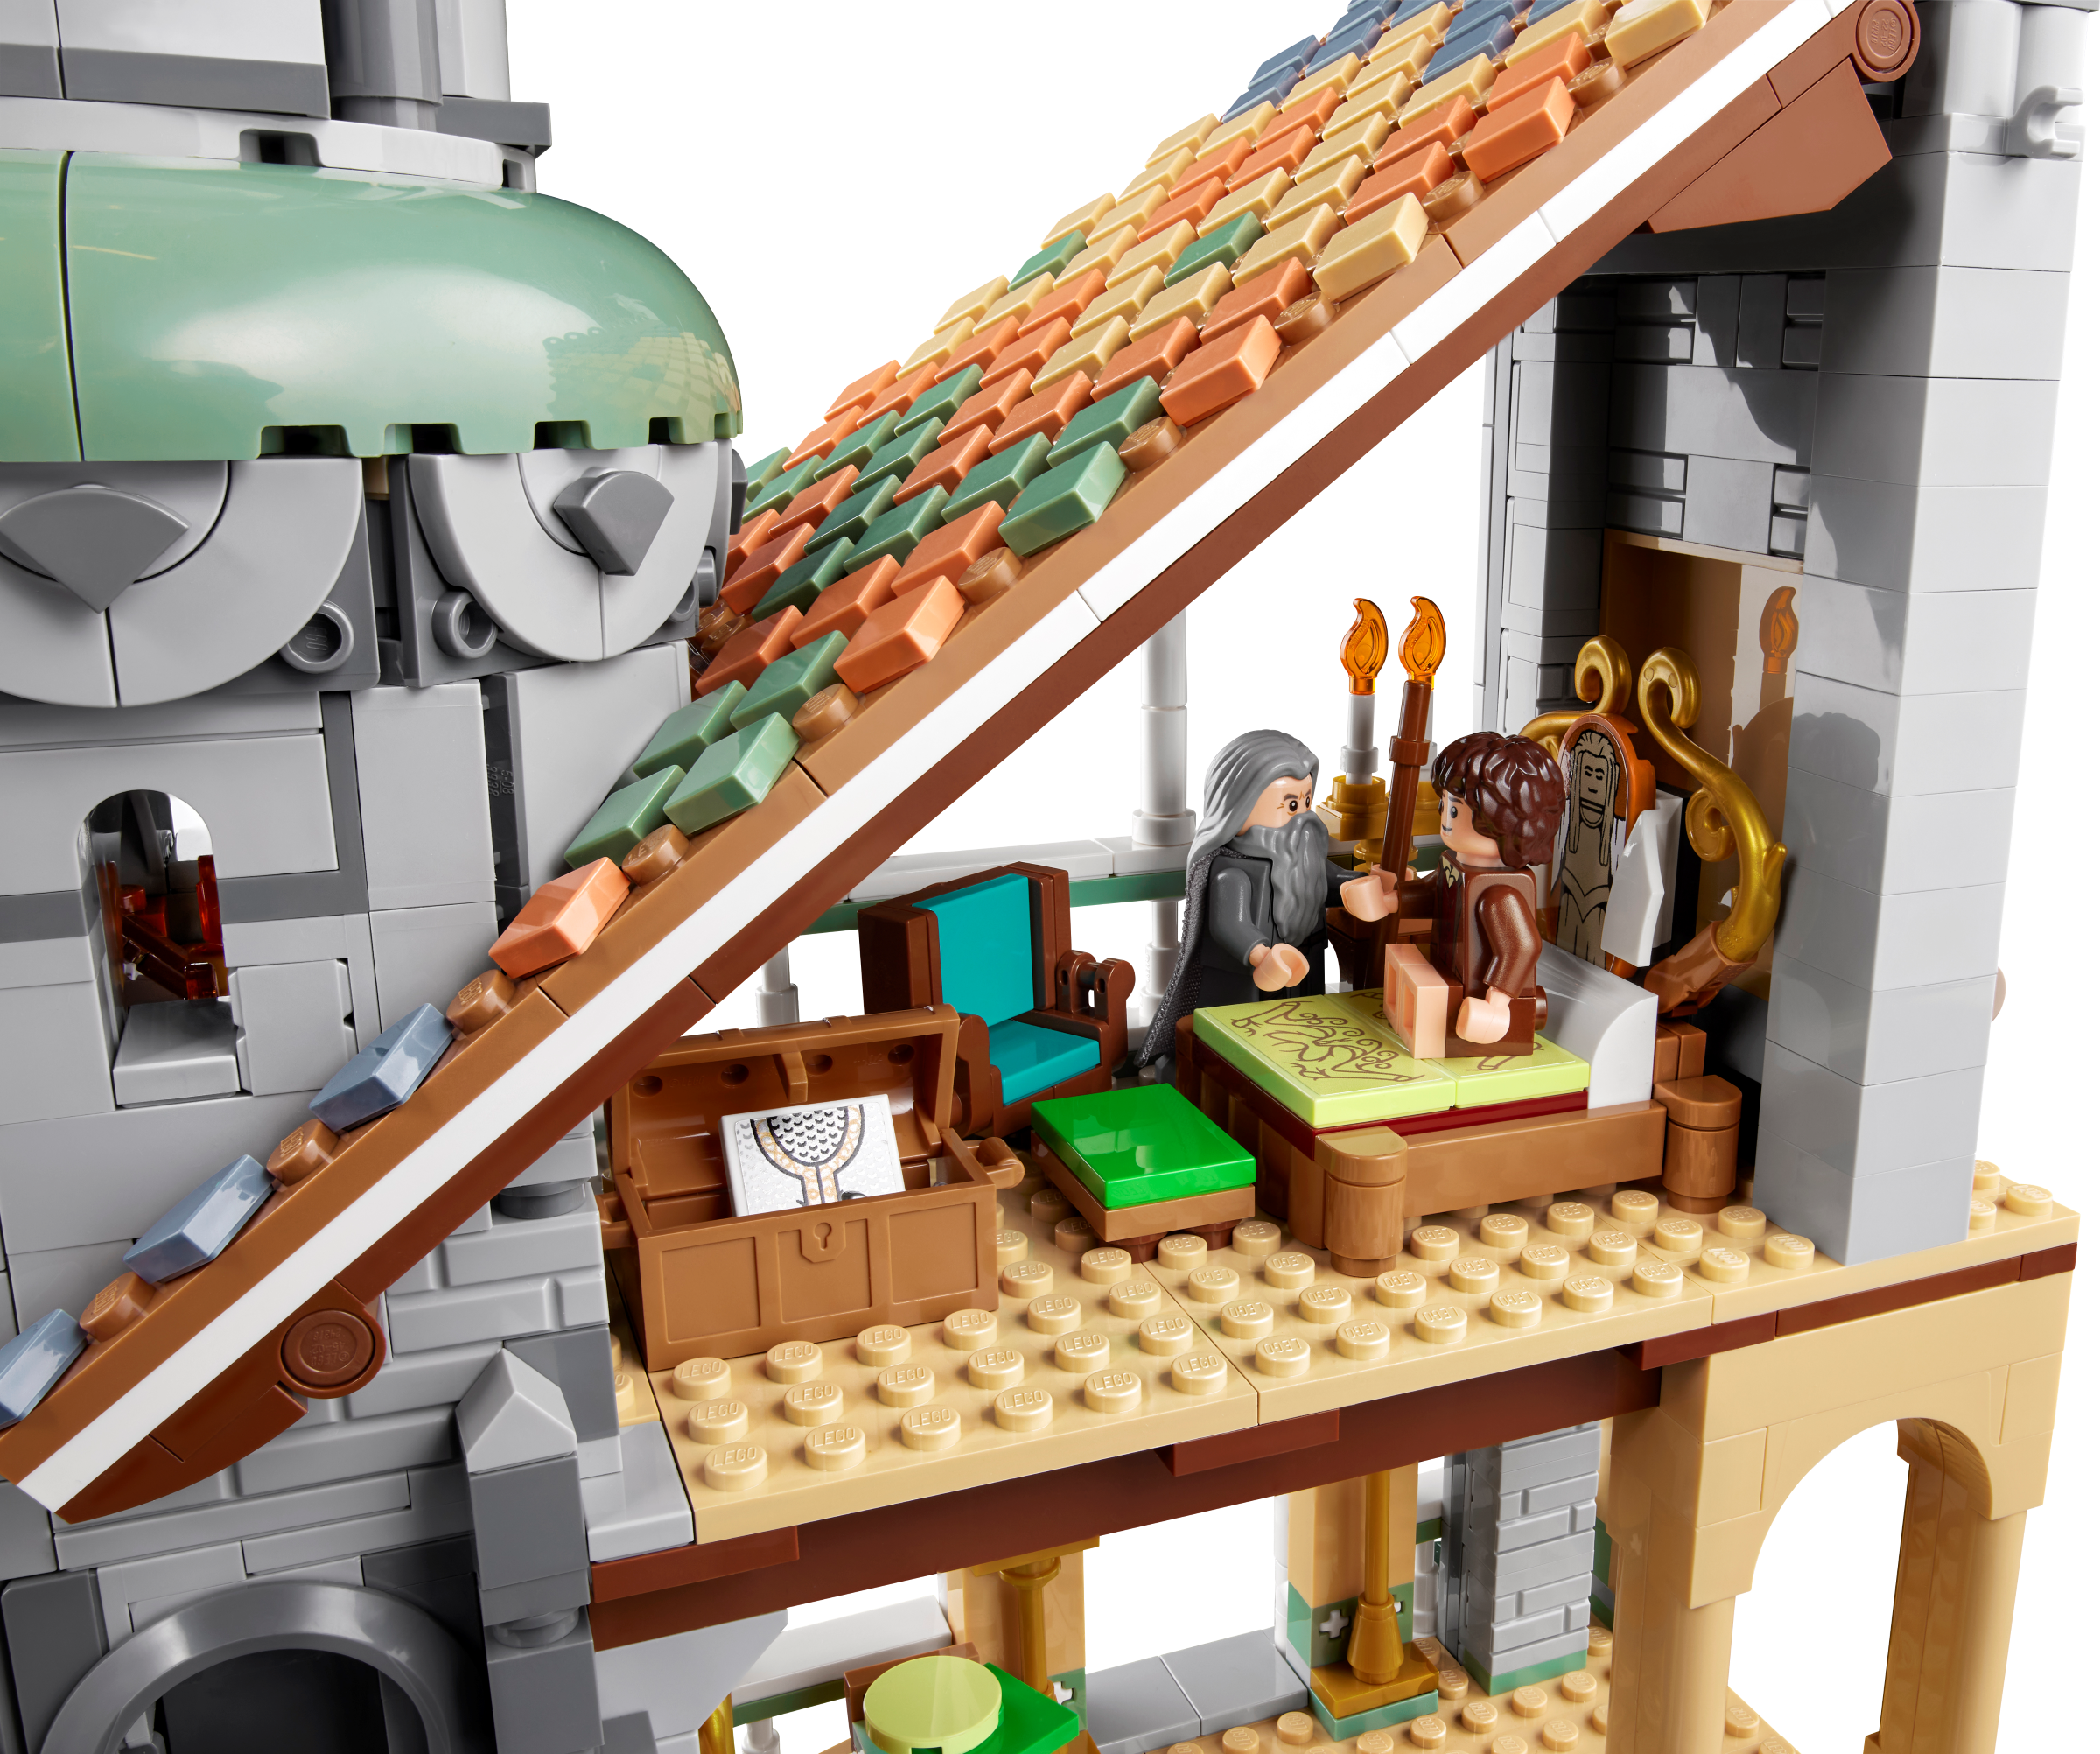 LEGO IDEAS - Rivendell